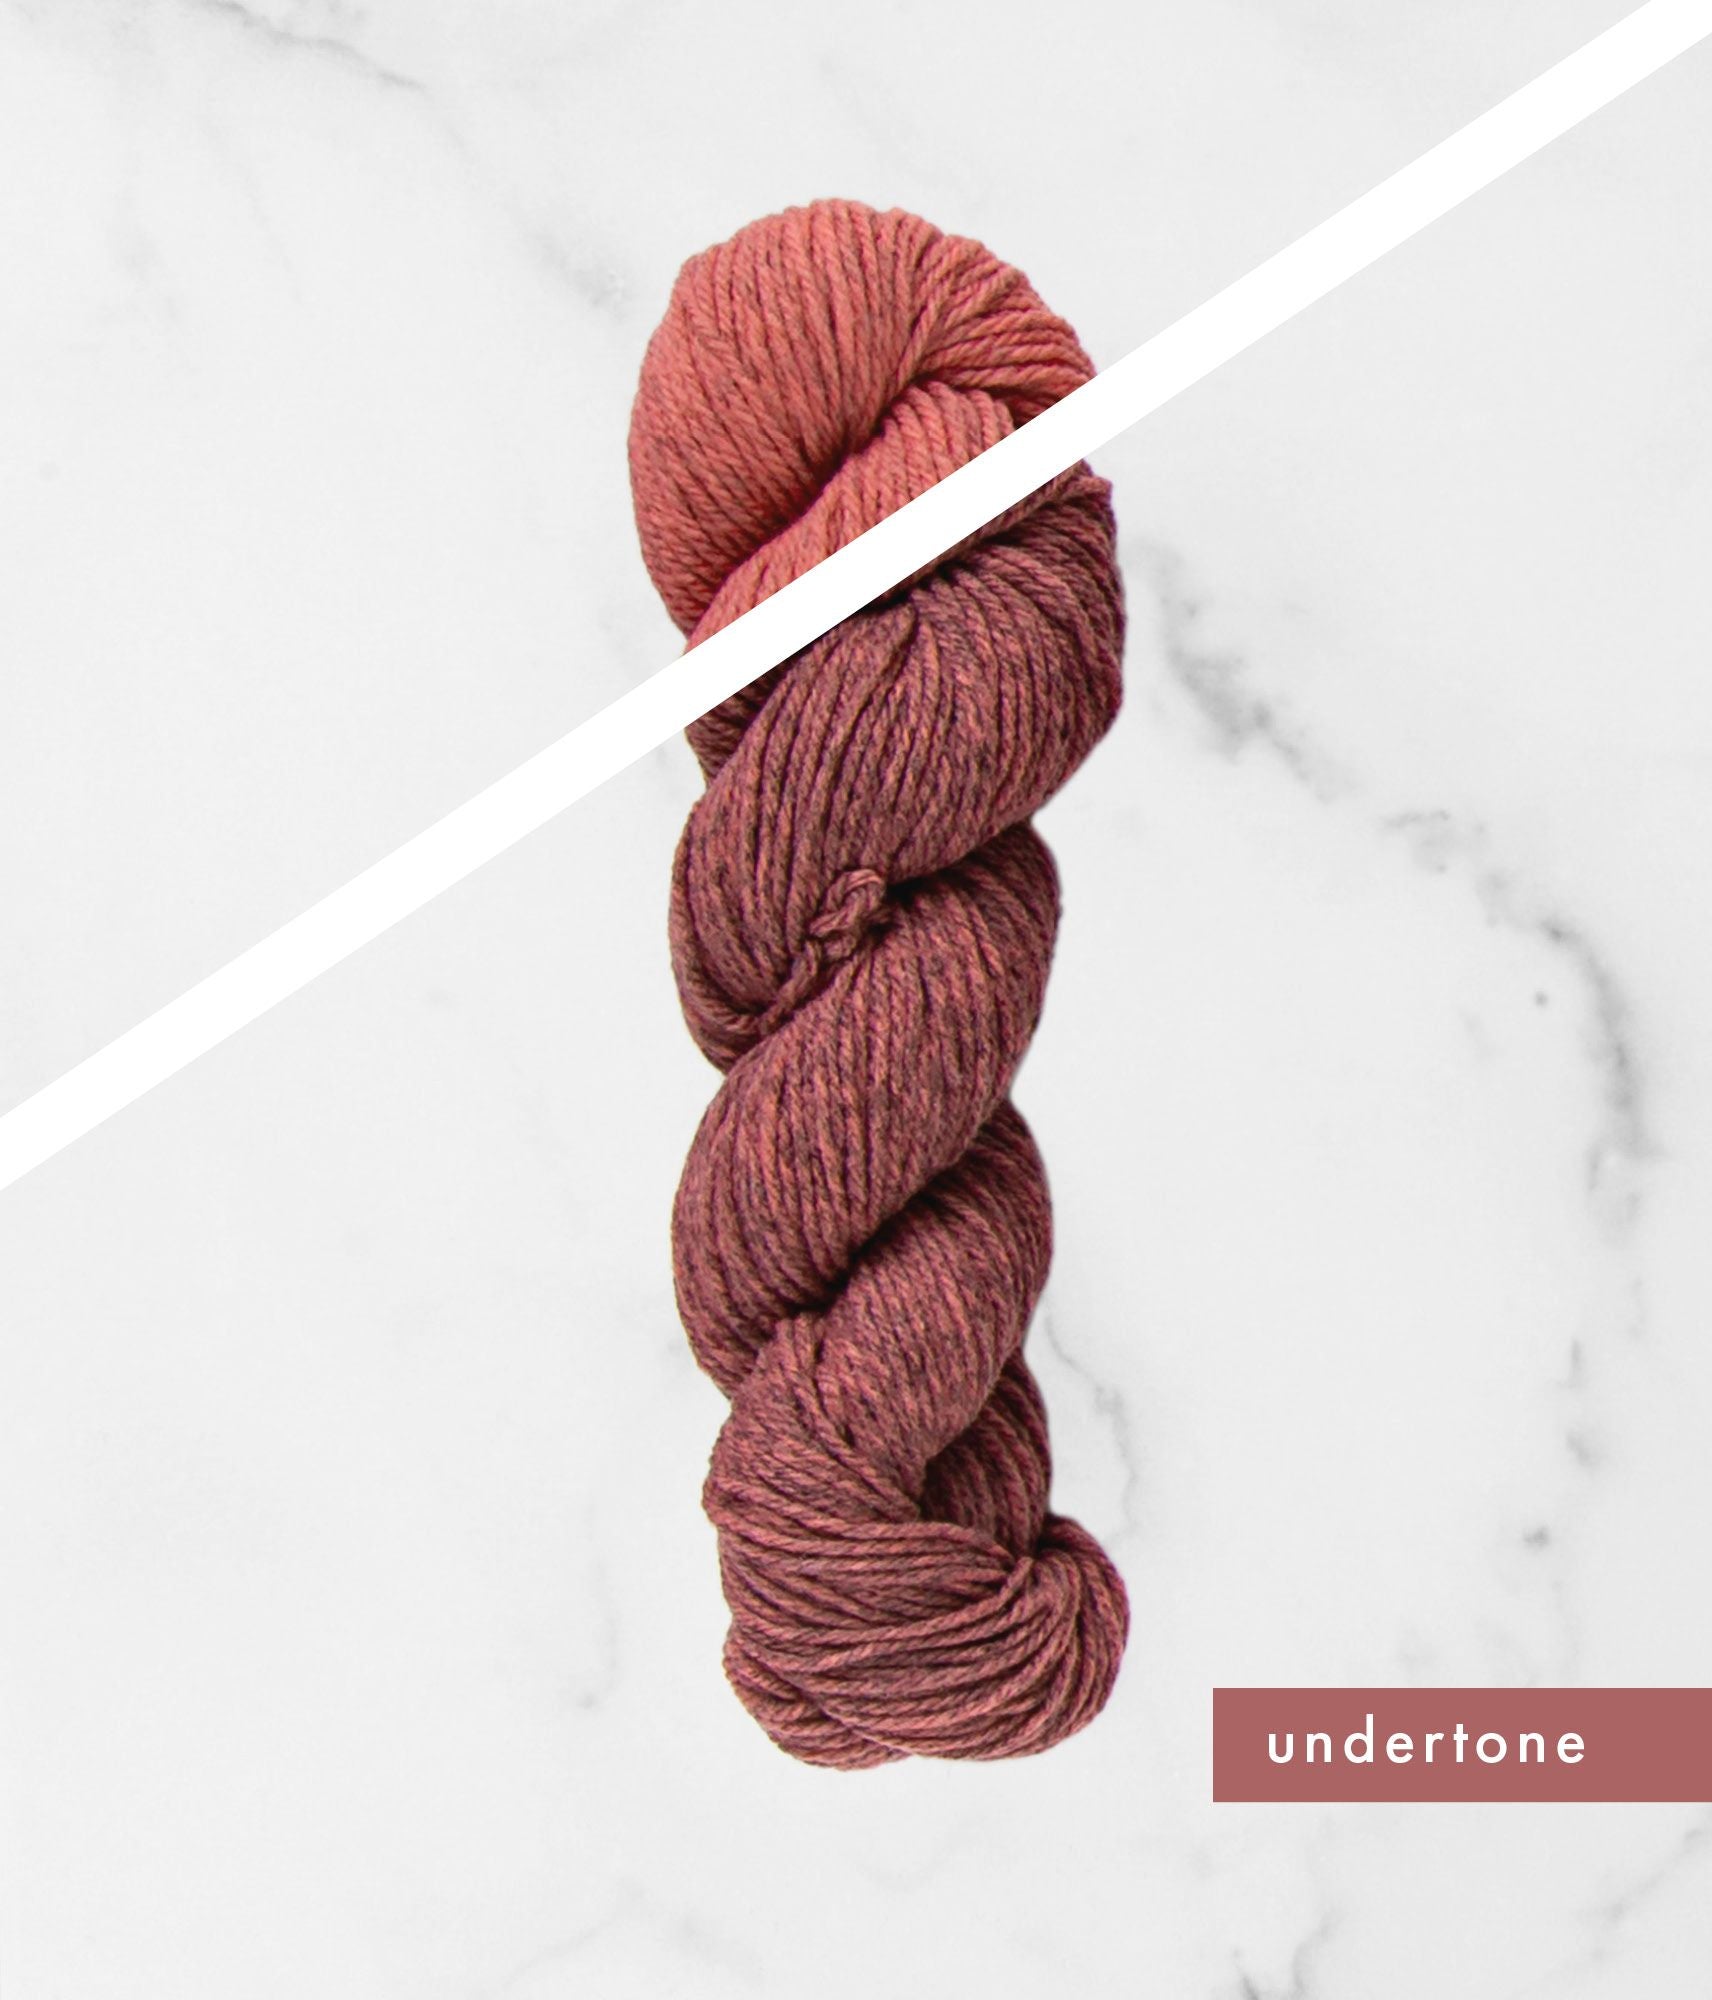 Dusty Rose overtone and undertone BT Tones hanks of yarn